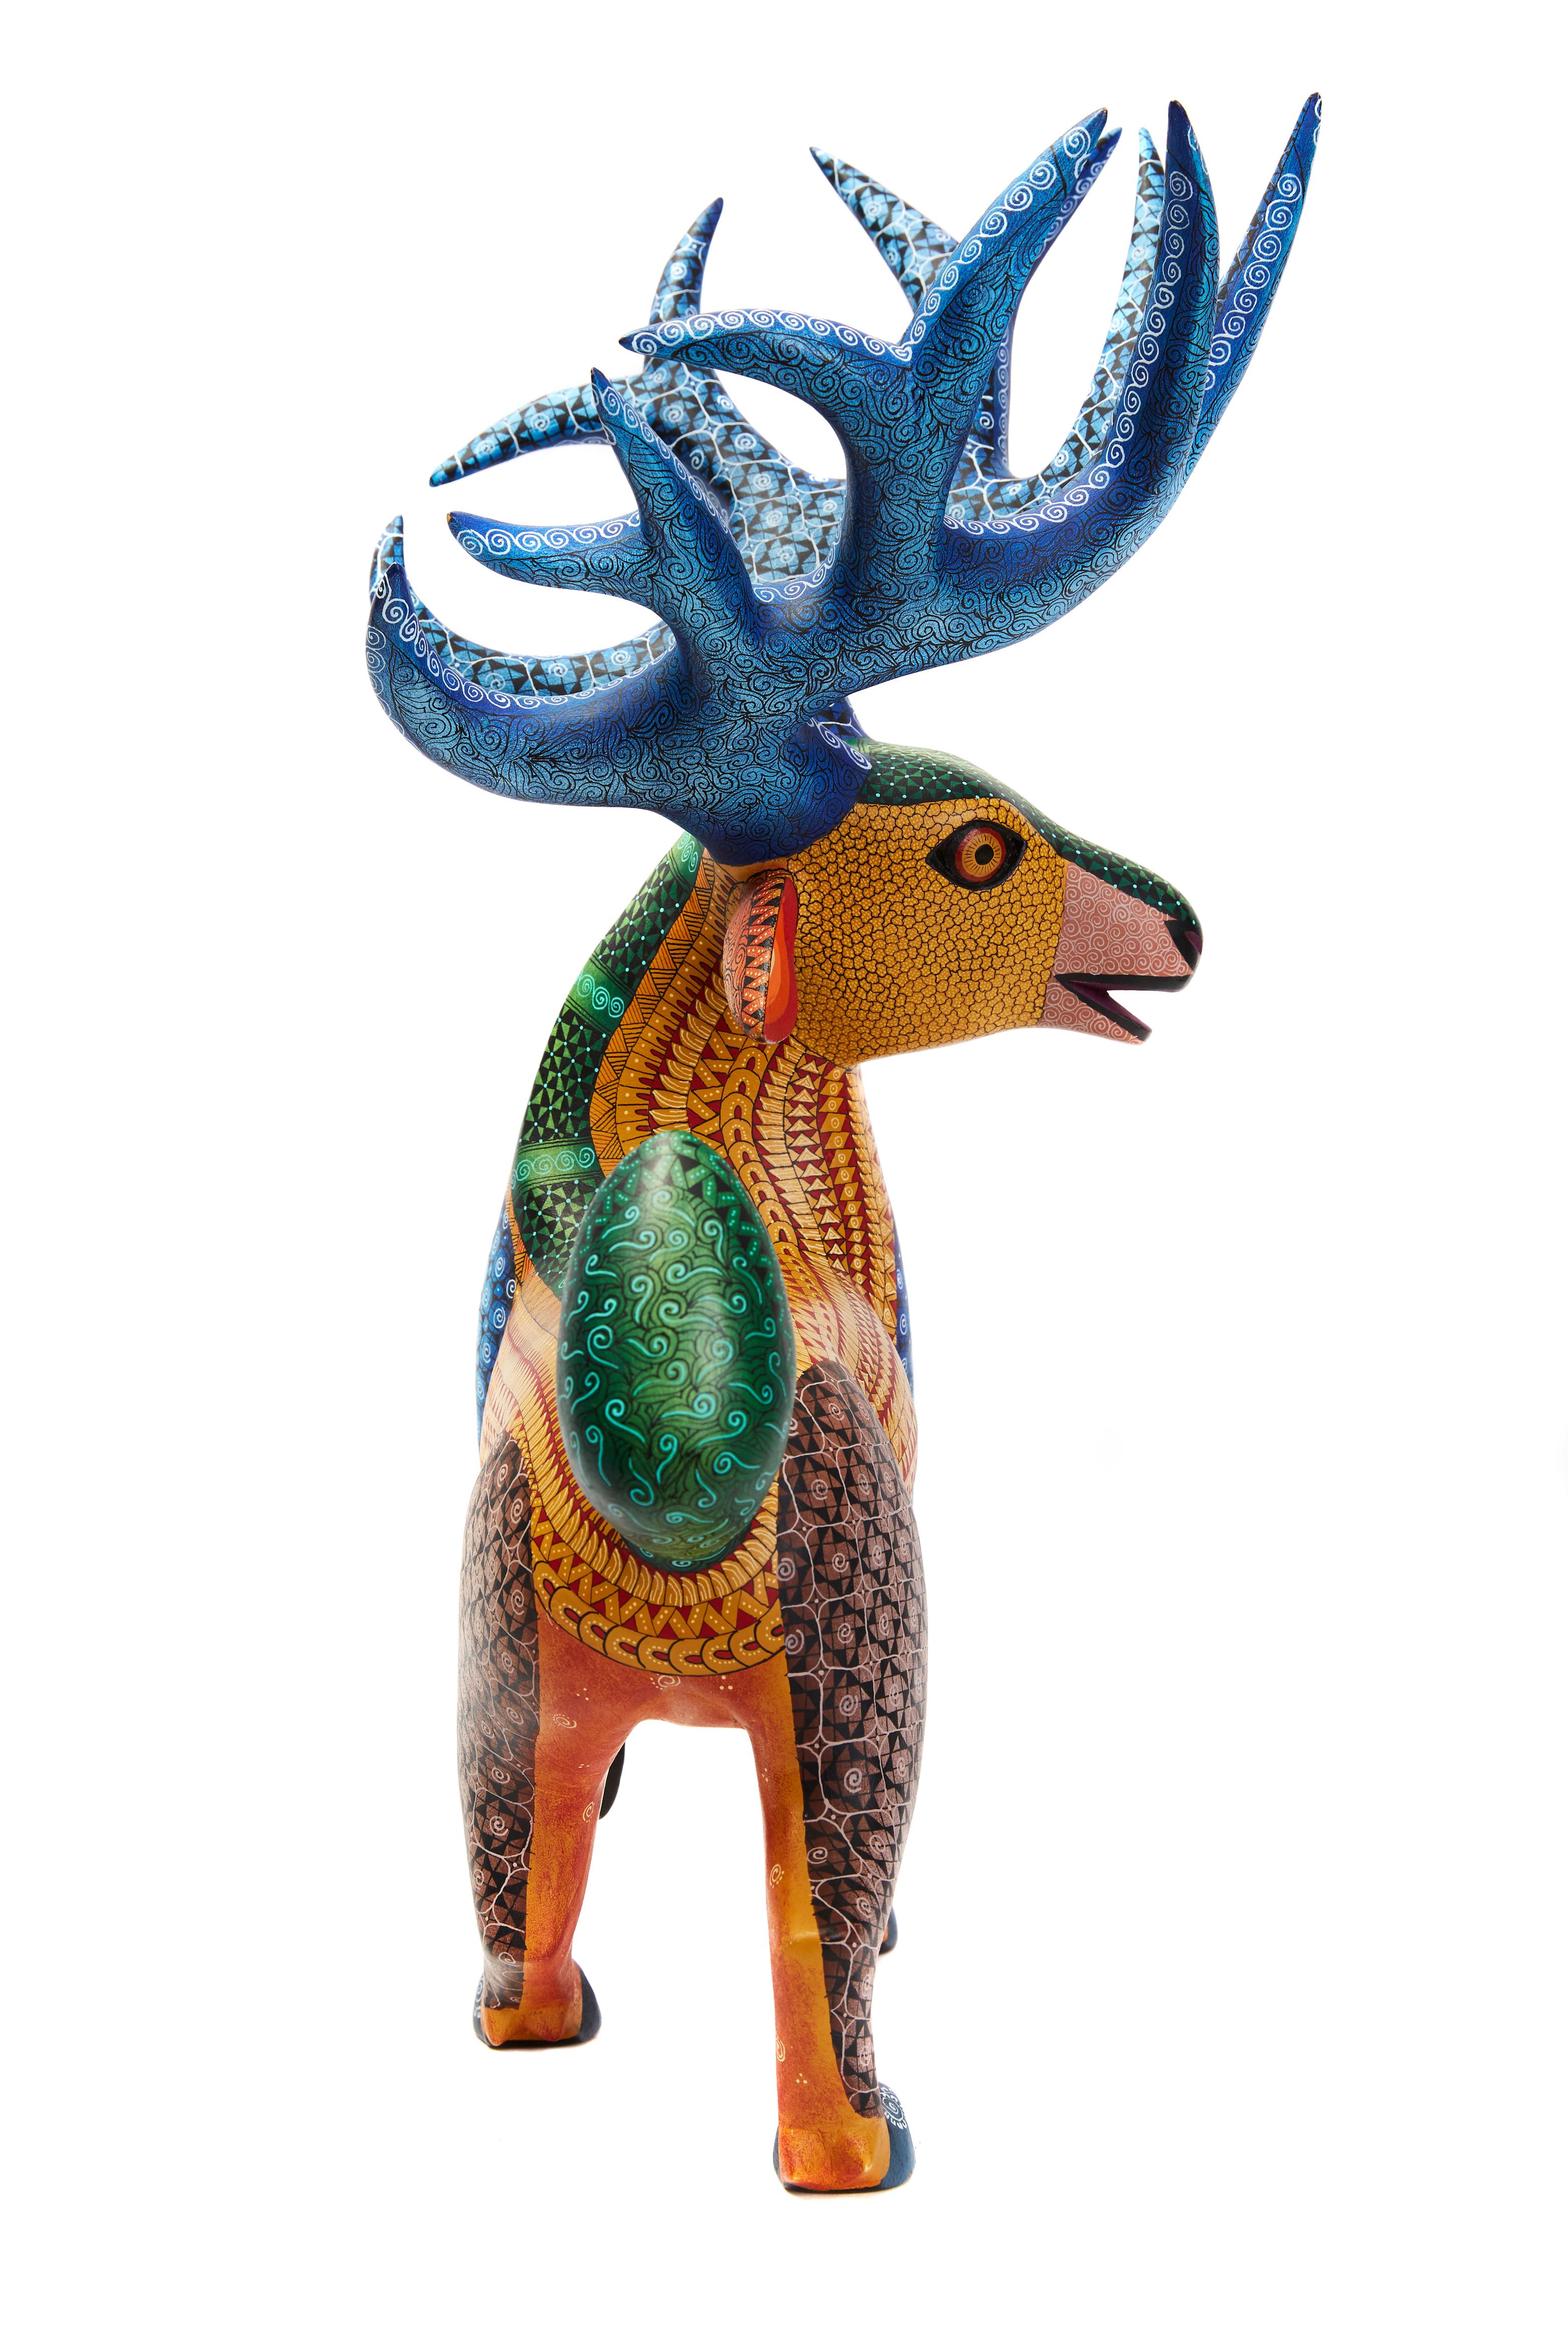 Venado, Deer,  Mexican Alebrije, Mexican Folk Art, Oaxaca Wood Carving - Brown Figurative Sculpture by Roxana y Jesus Hernandez